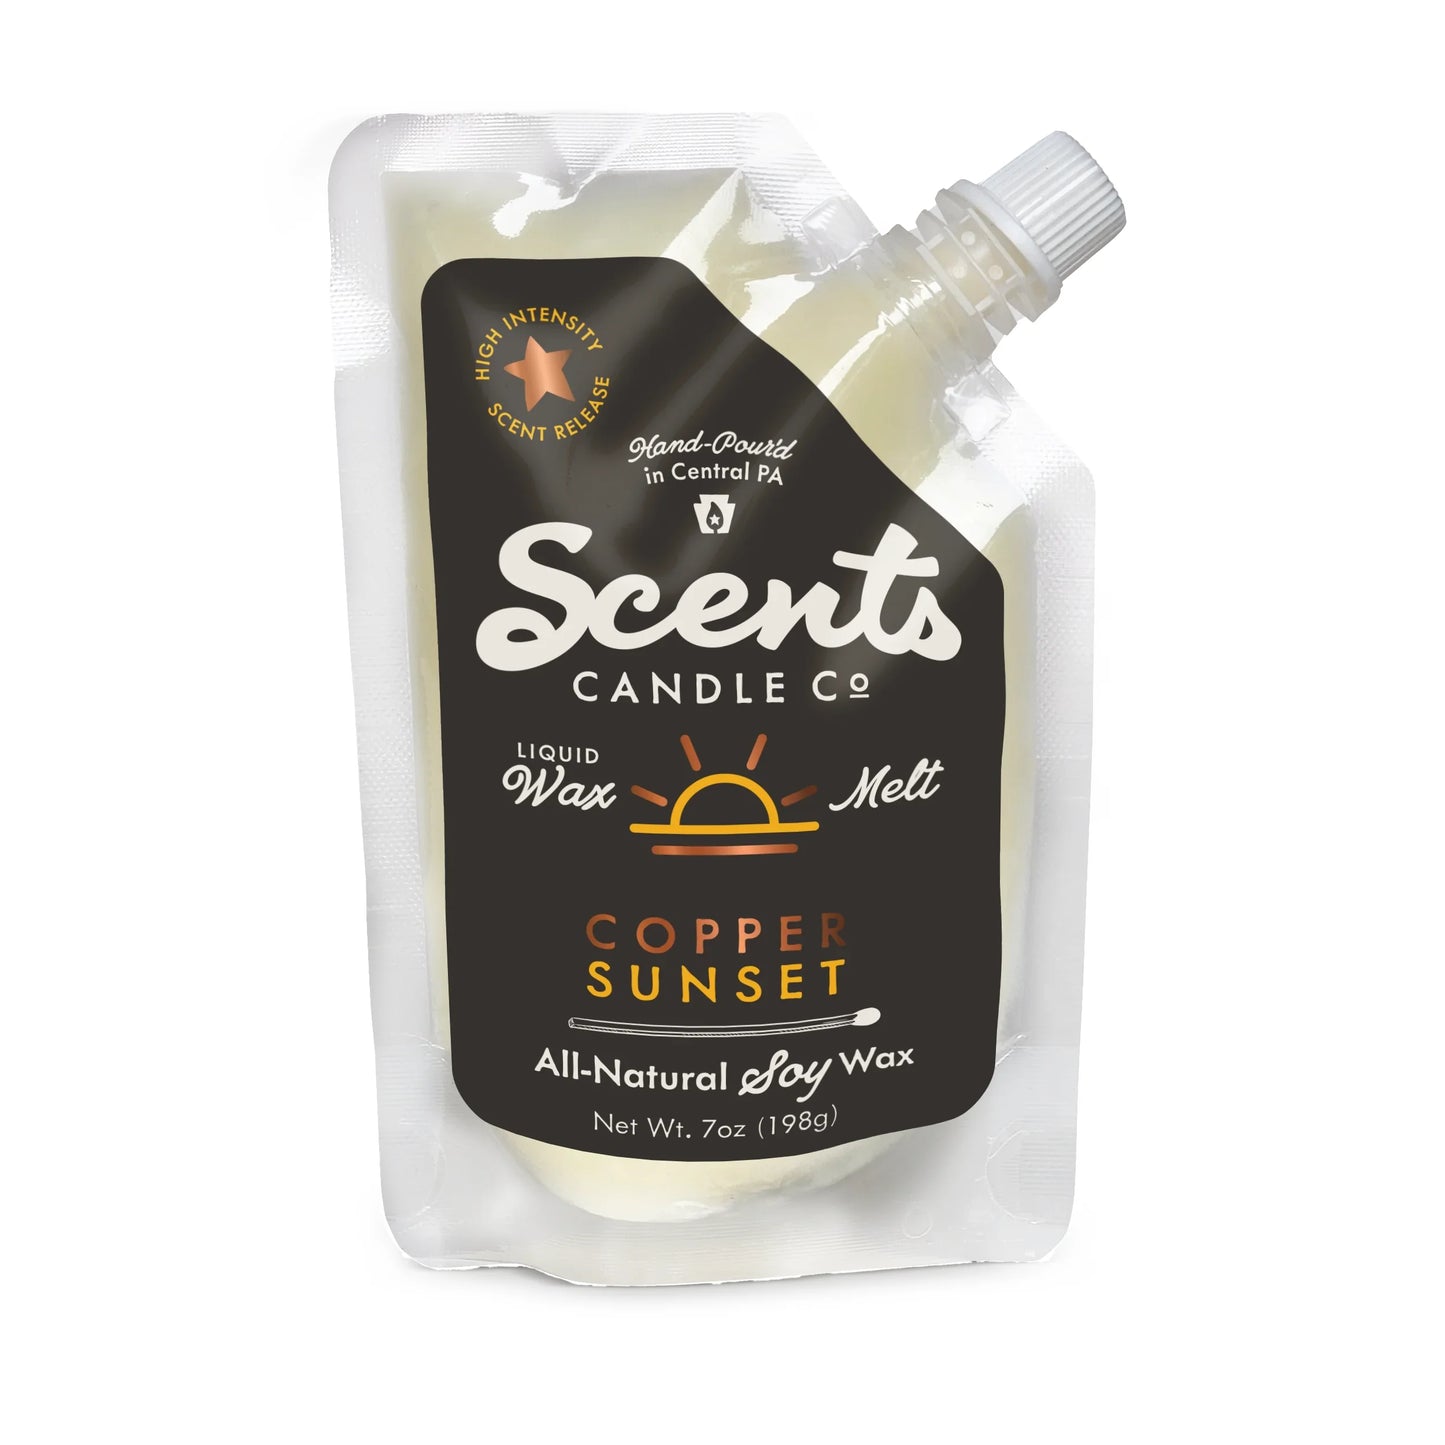 Scents Candle Co. Copper Sunset Liquid Wax Melt